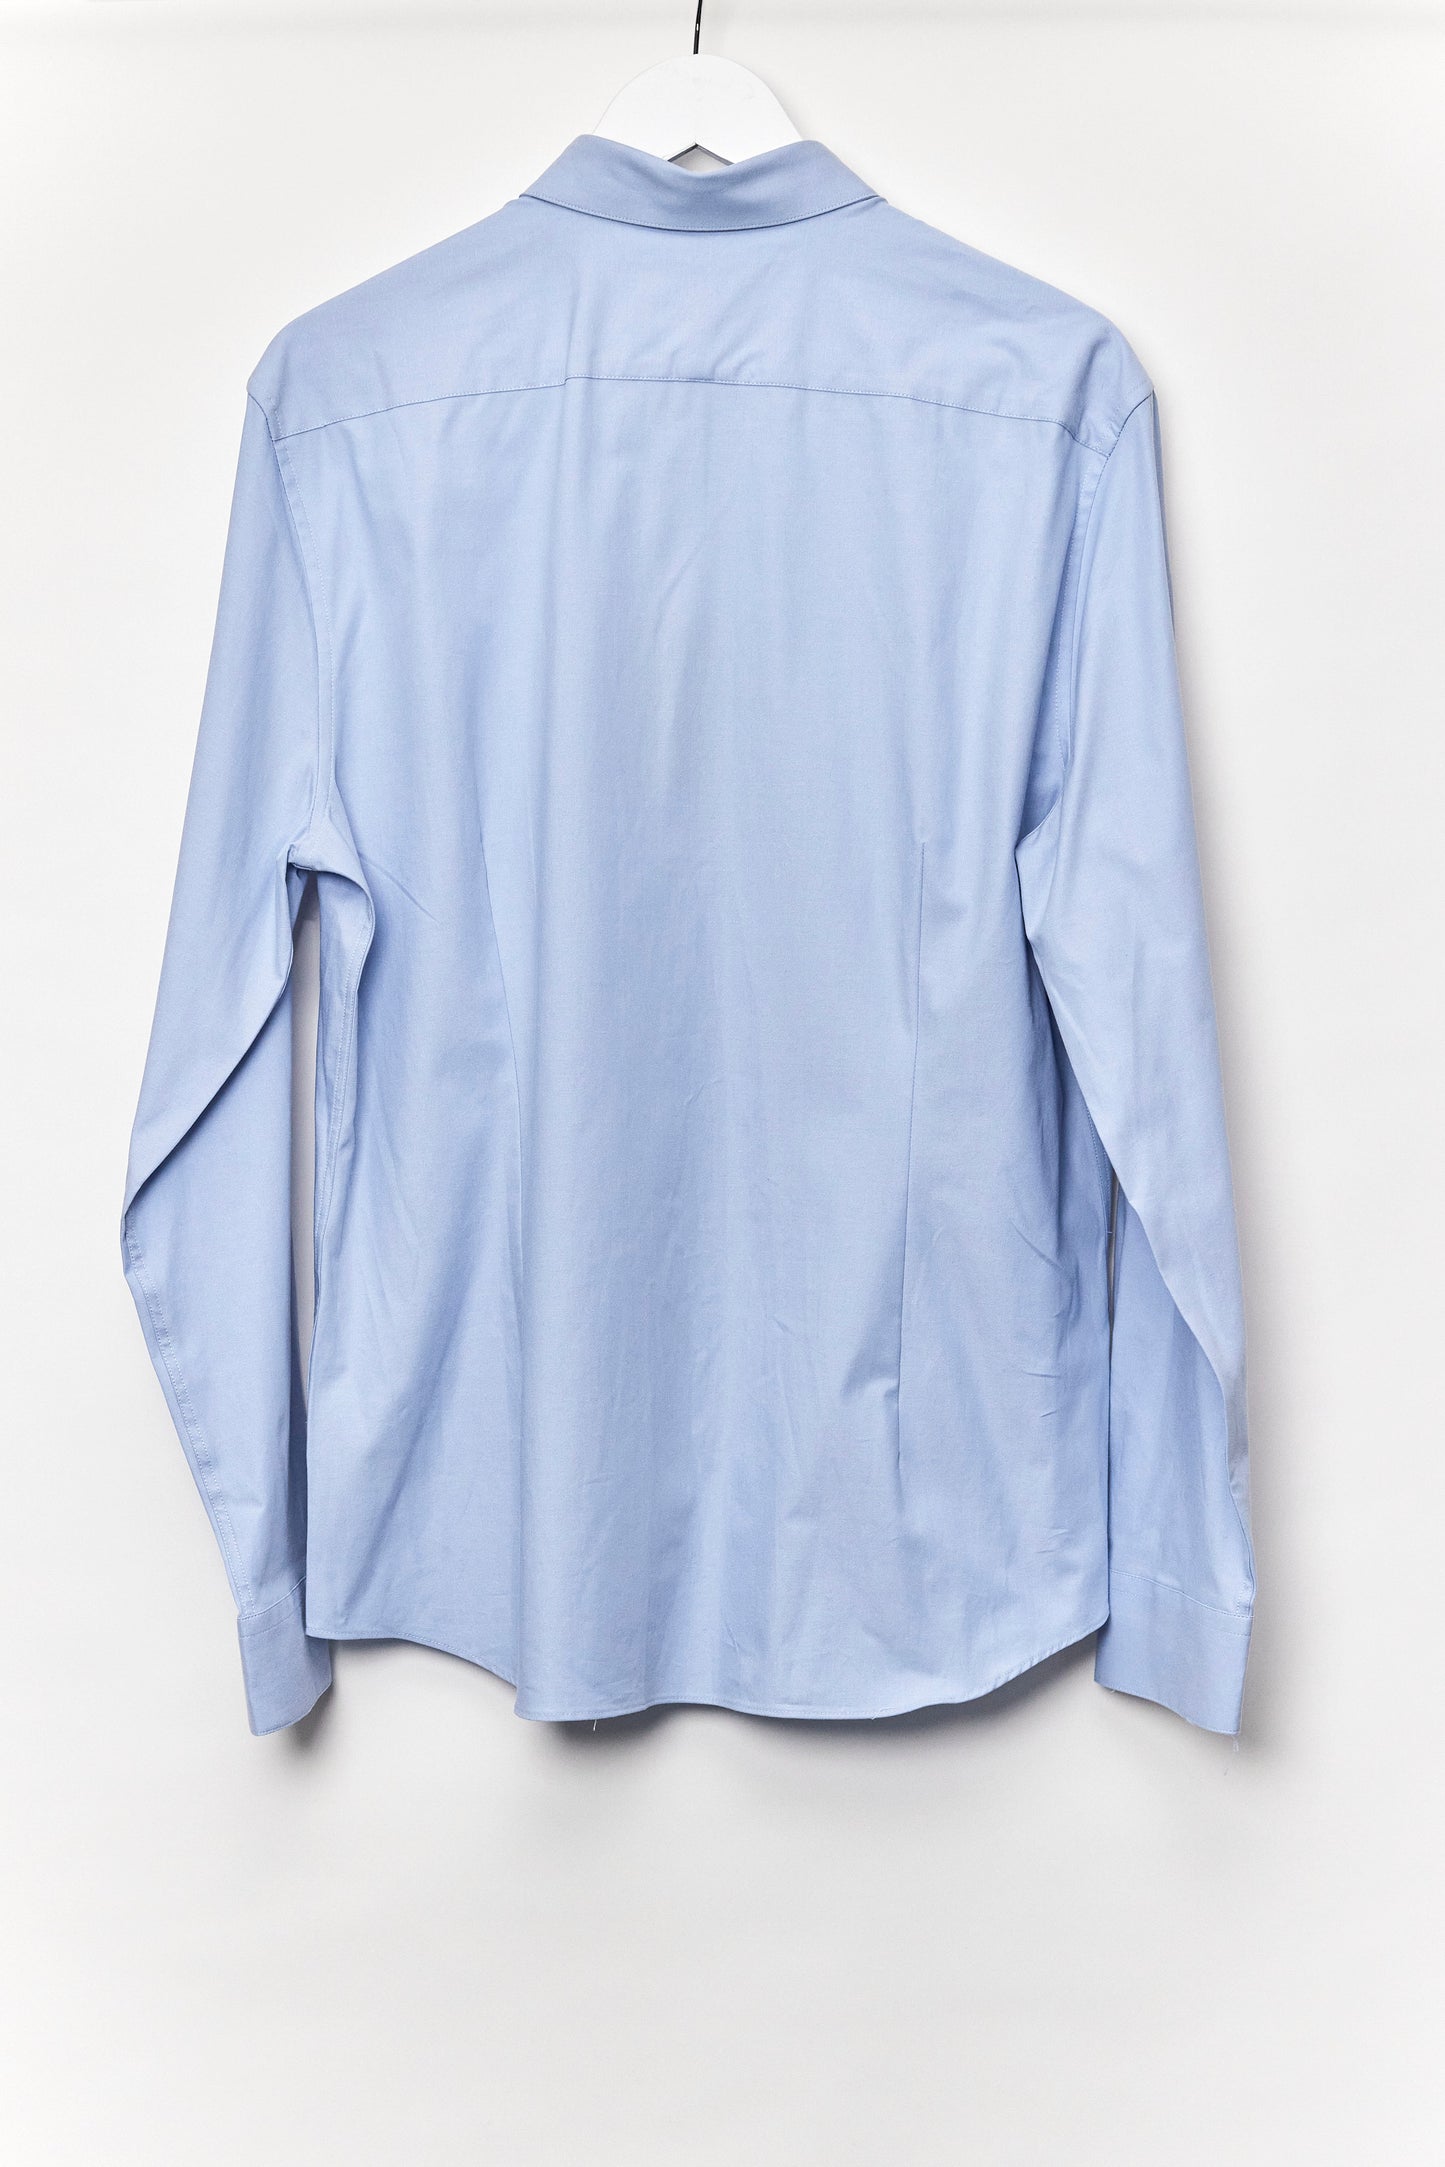 Mens M&S Blue Oxford slim fit shirt size large